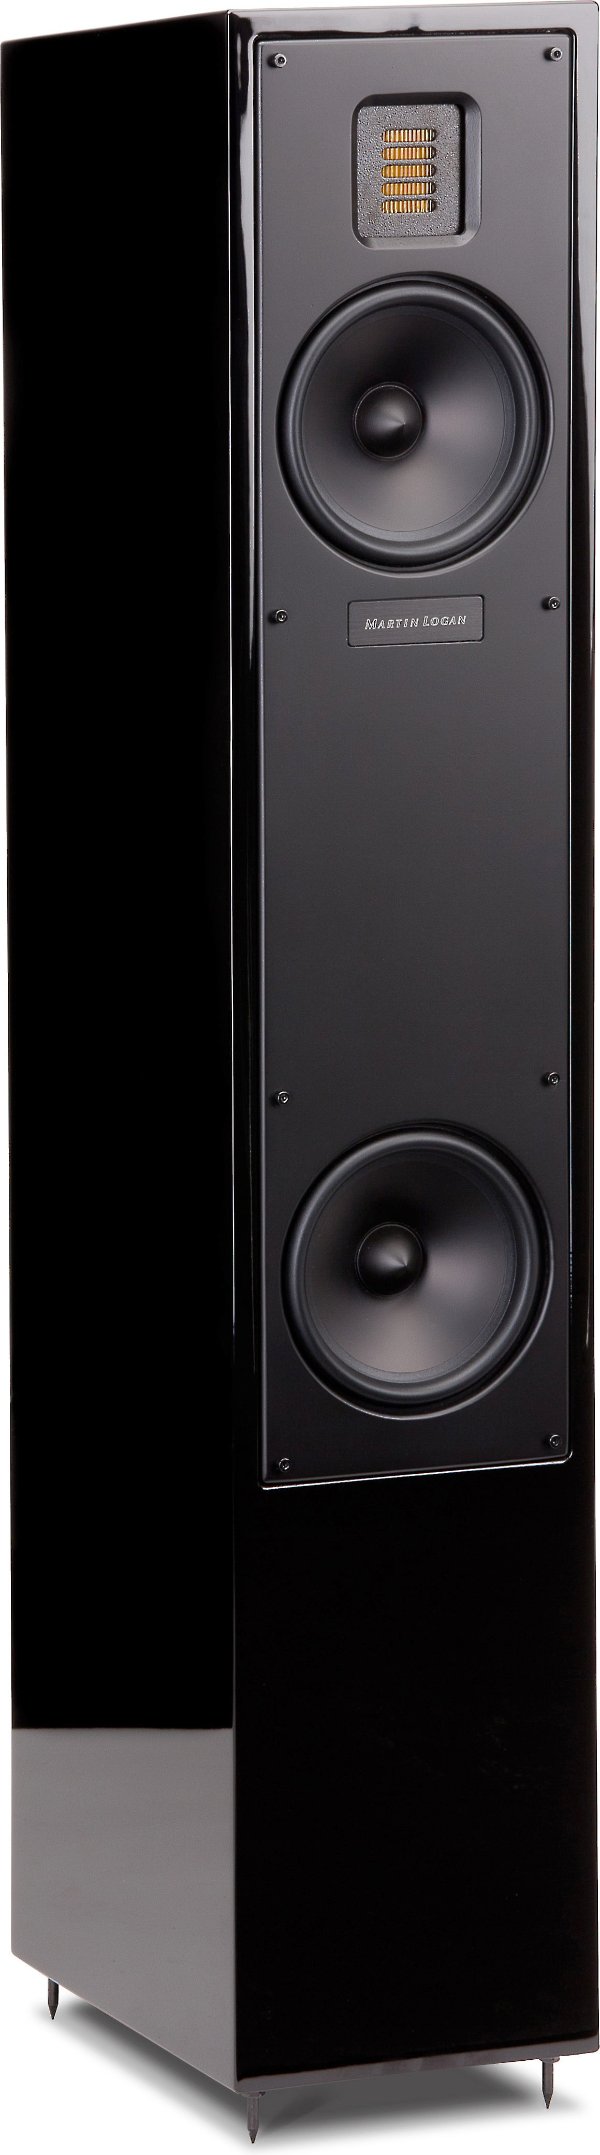 MartinLogan Motion® 20 (Gloss Black) Floor-standing speaker at Crutchfield